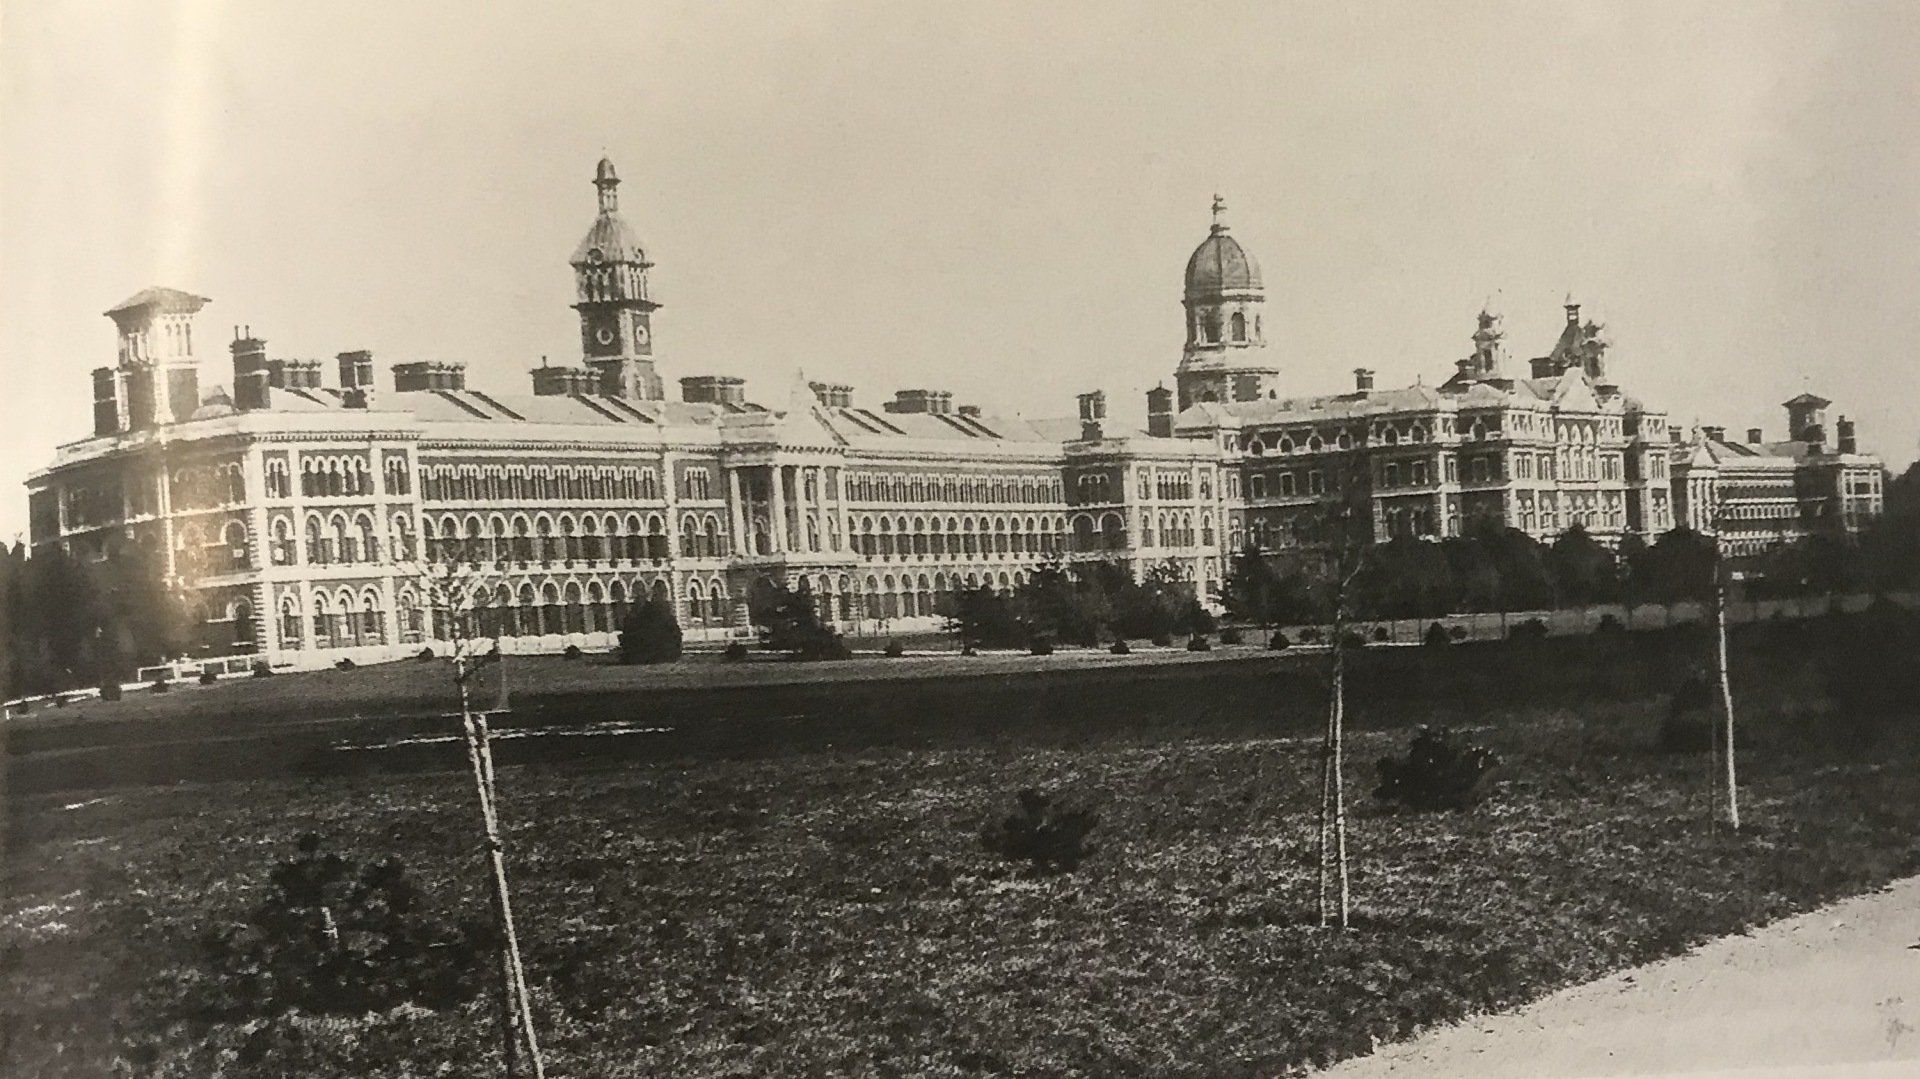 Netley Hospital in the early 20th century photo